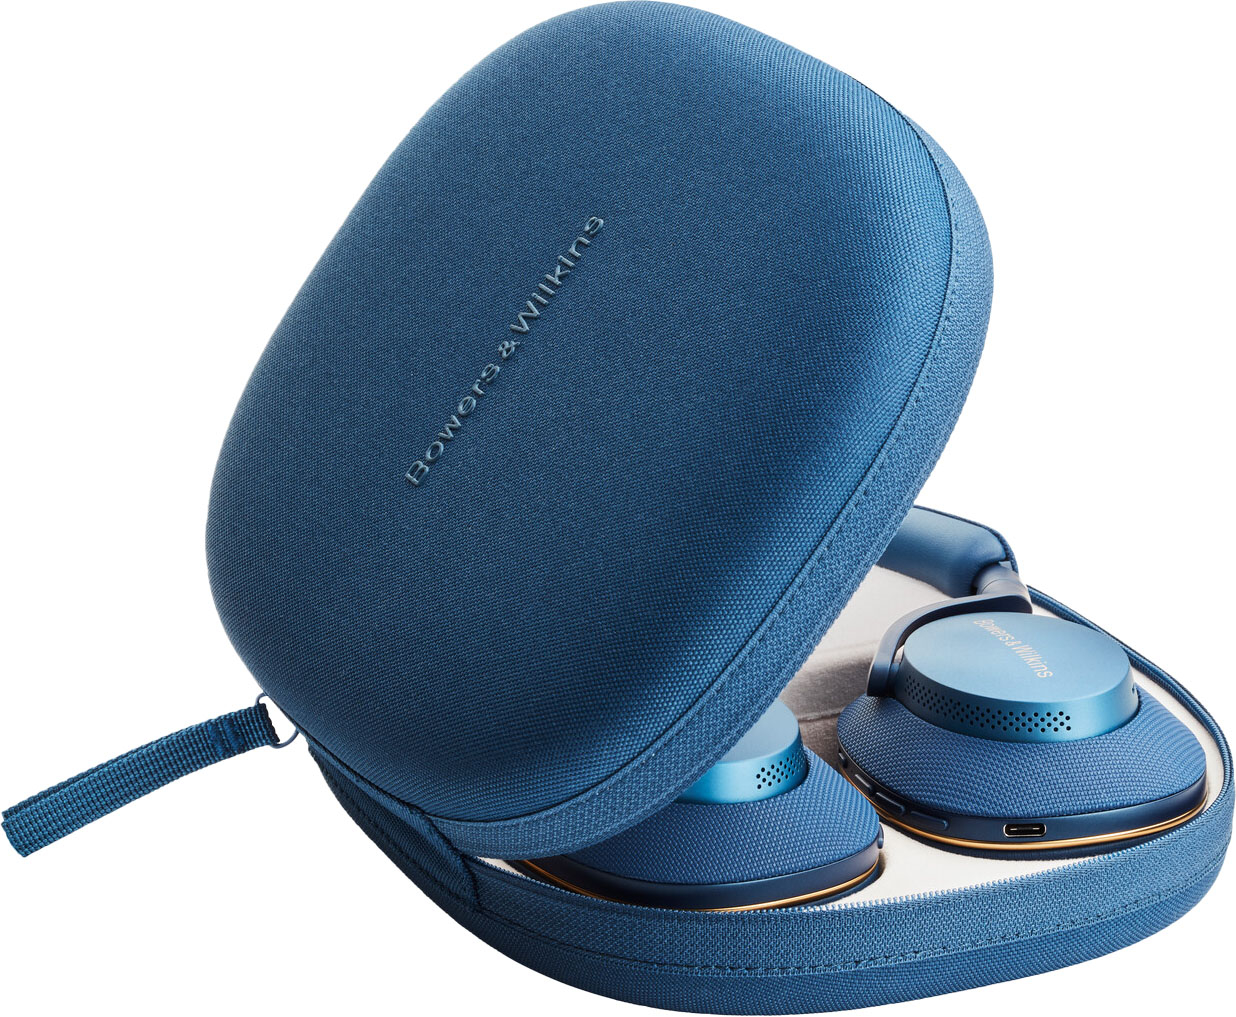 Px7 S2 Wireless Over-Ear Headphones